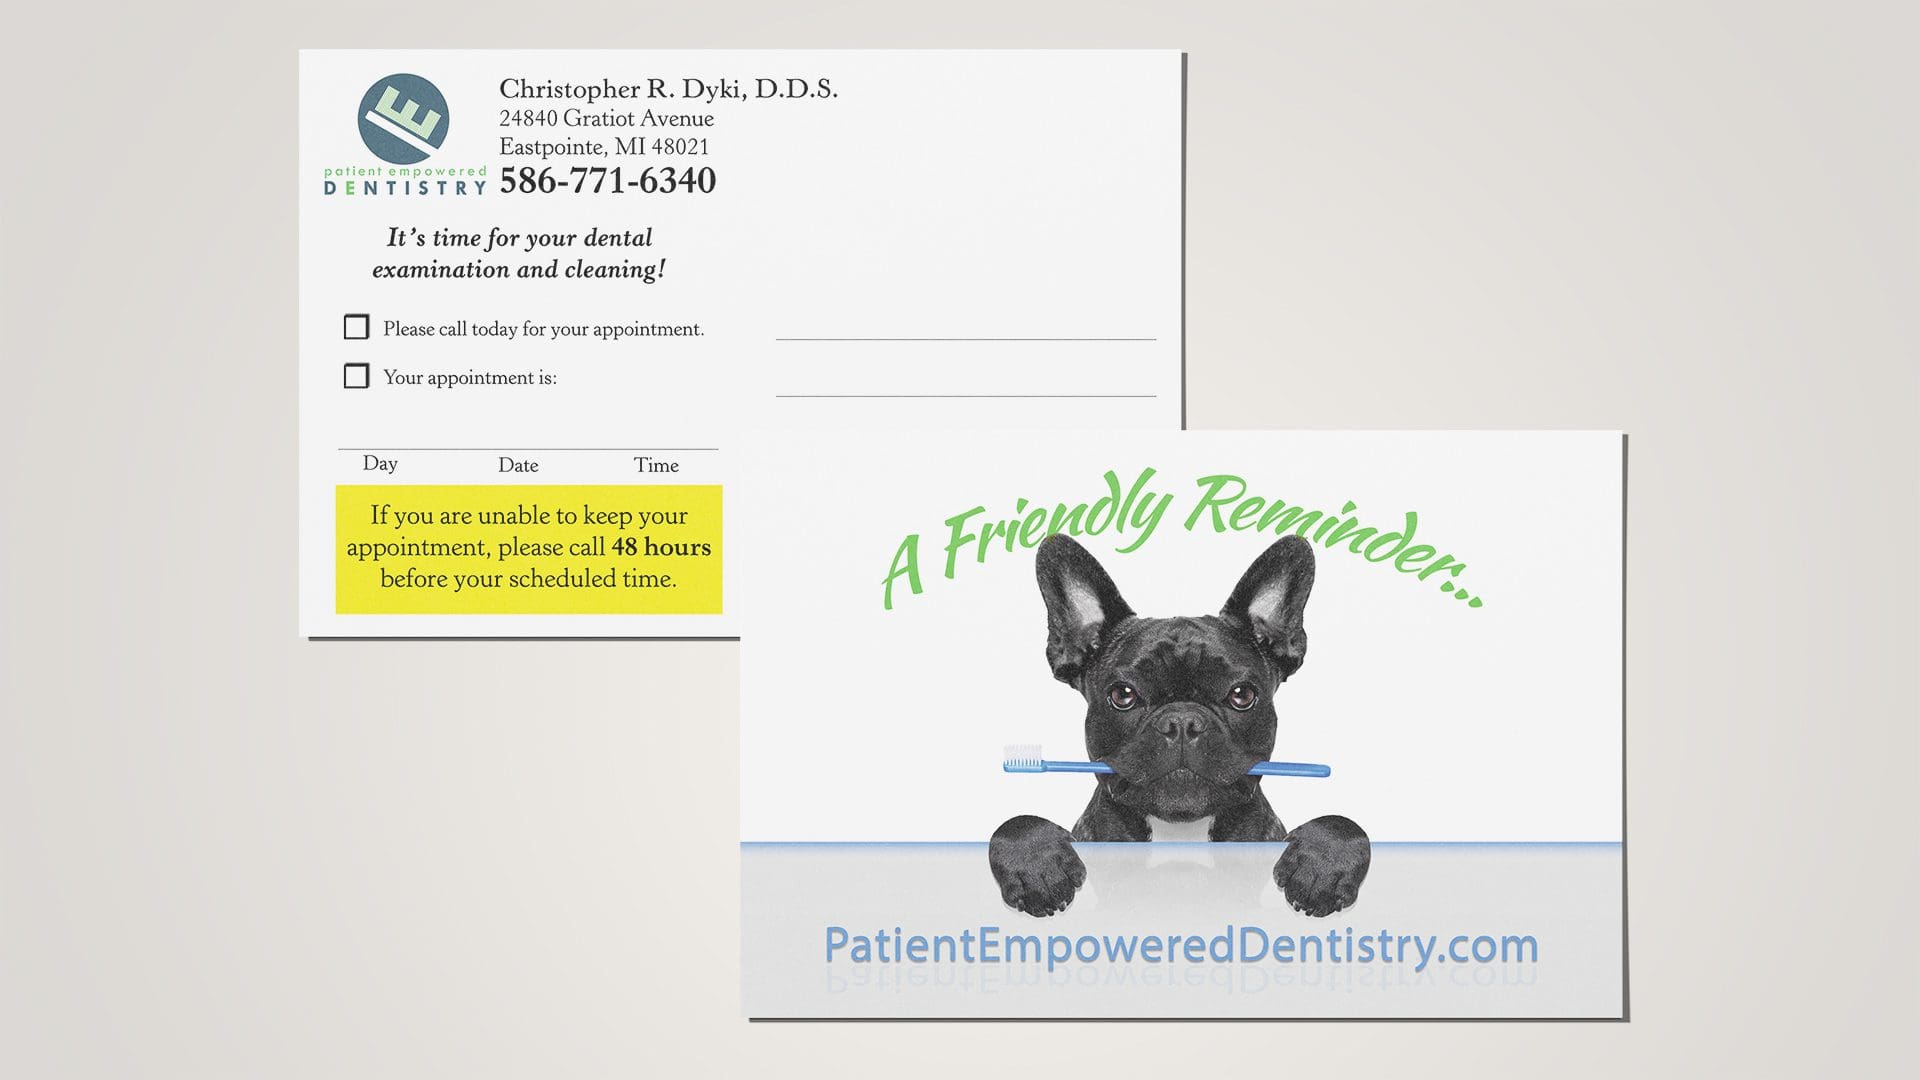 Patient Empowered Dentistry - Reminder Postcard Mockup 01